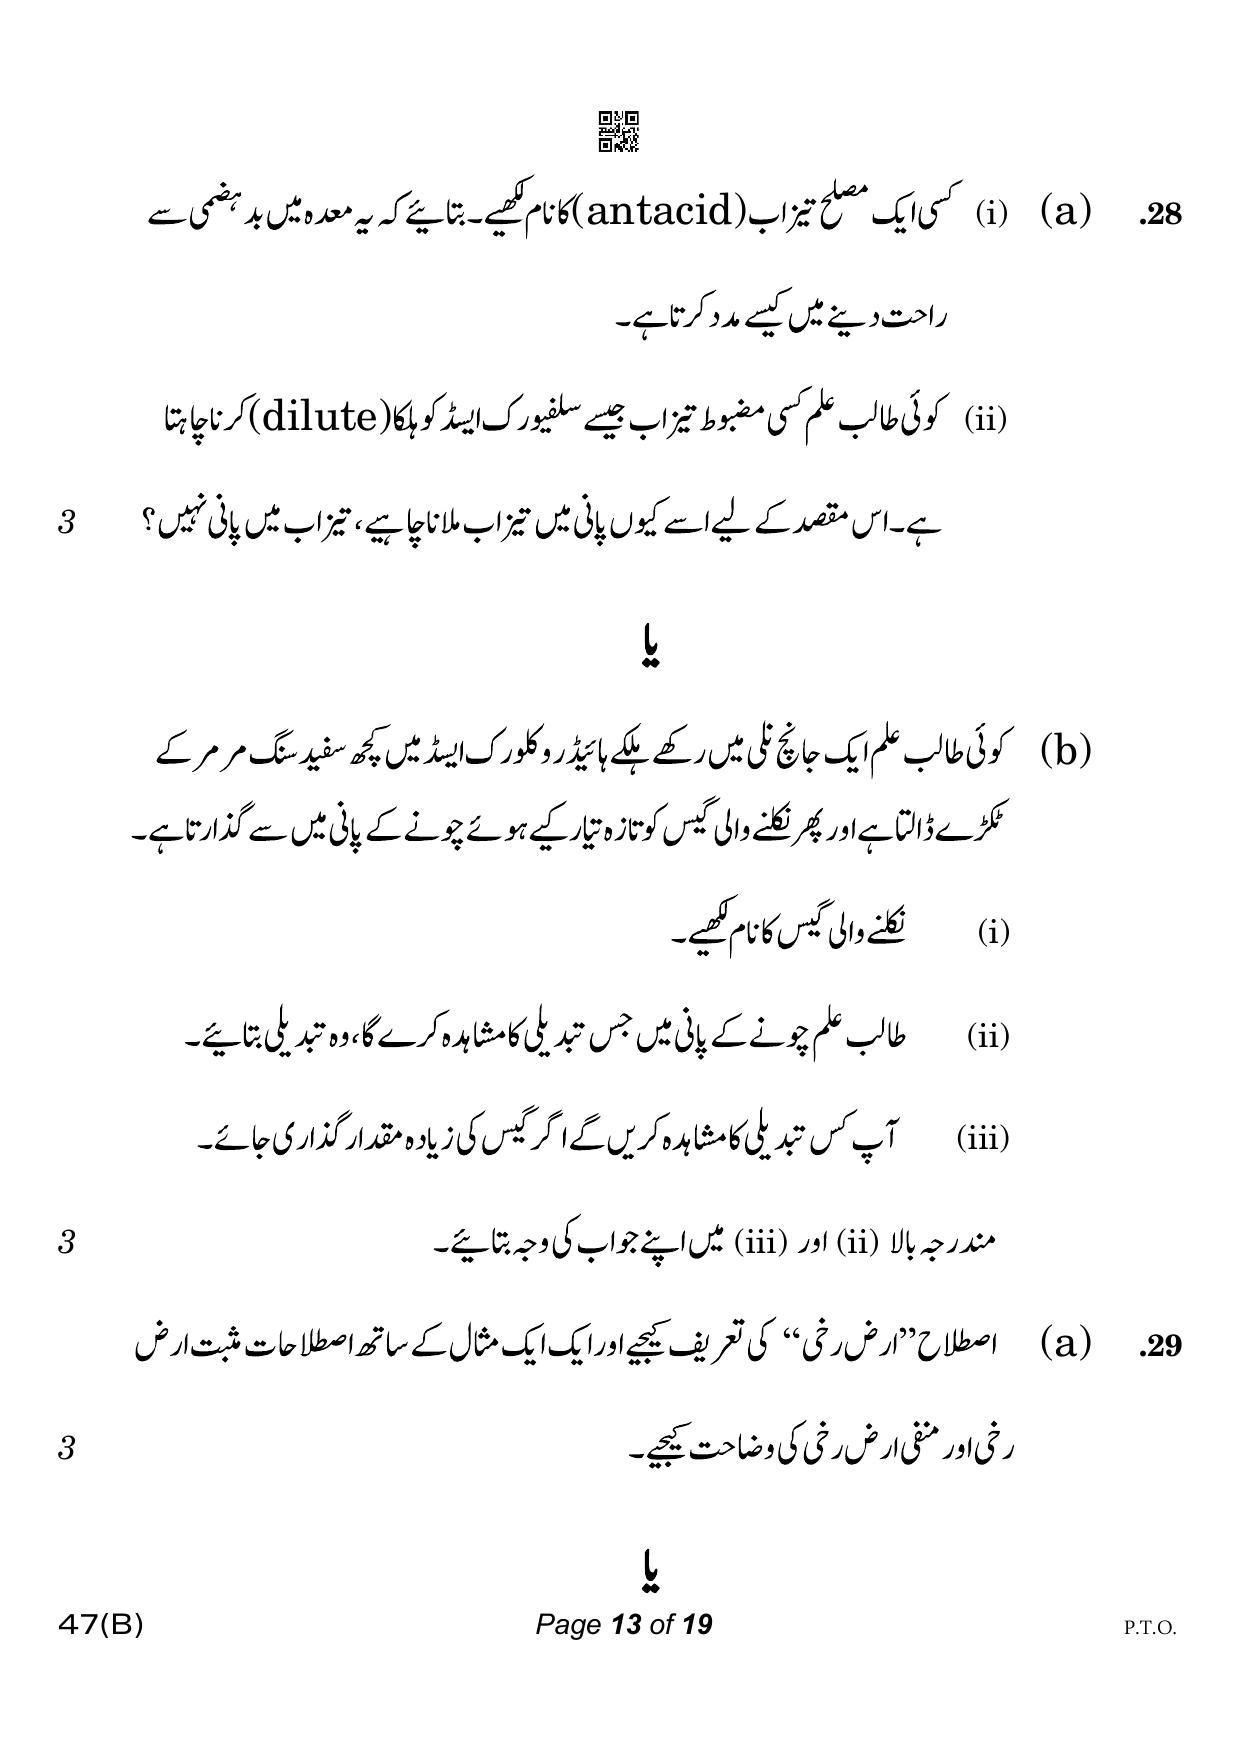 CBSE Class 10 47-B-5 Science for VI Urdu Version 2023 Question Paper - Page 13